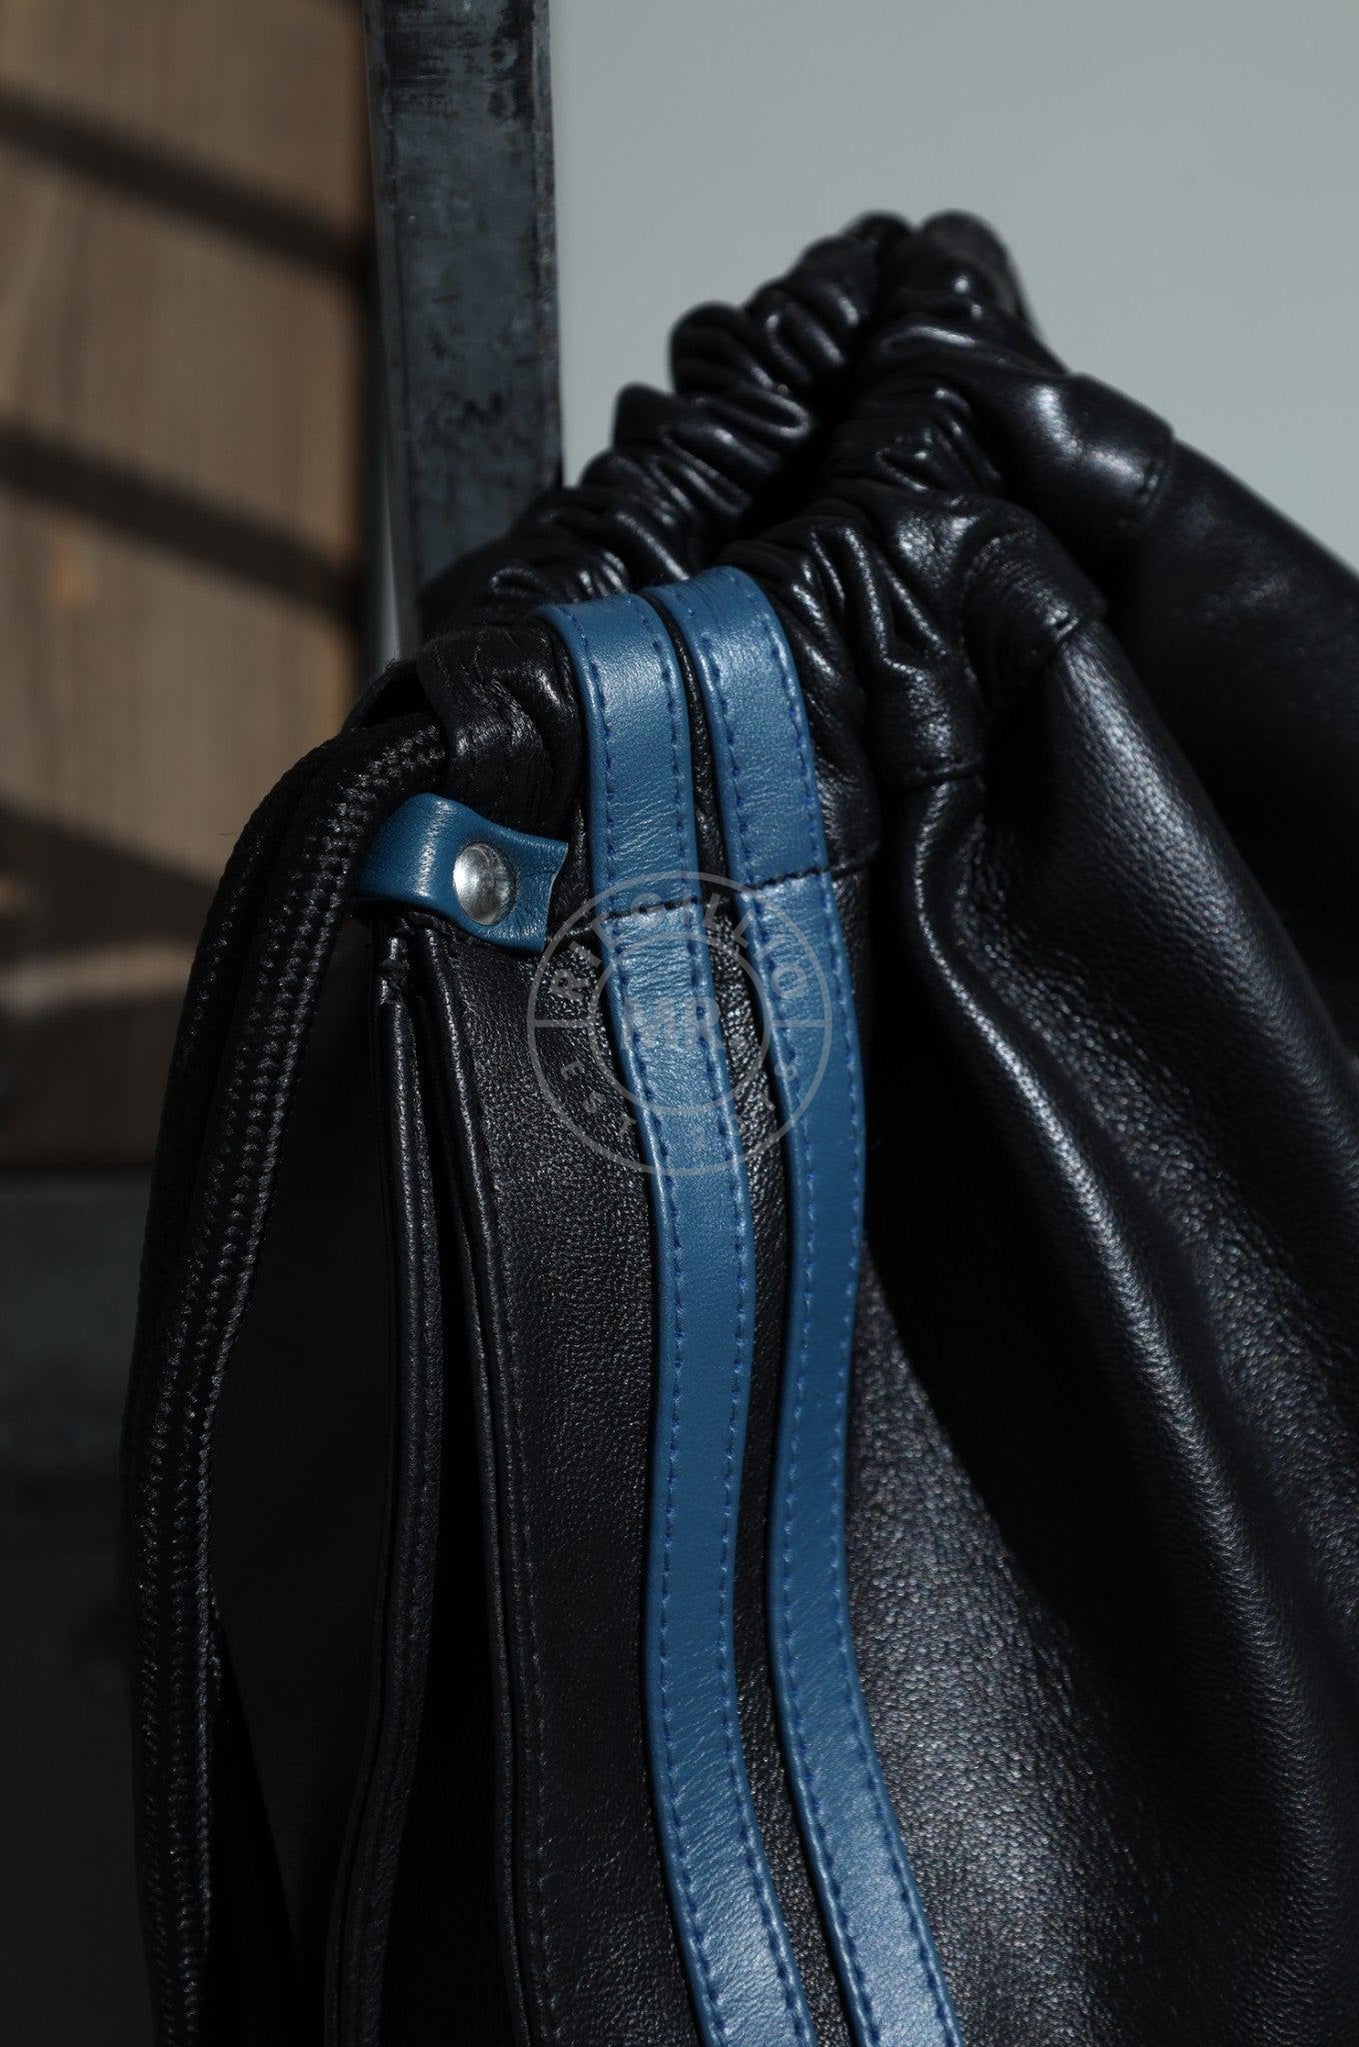 Leather Backpack Black - Blue Stripes at MR. Riegillio